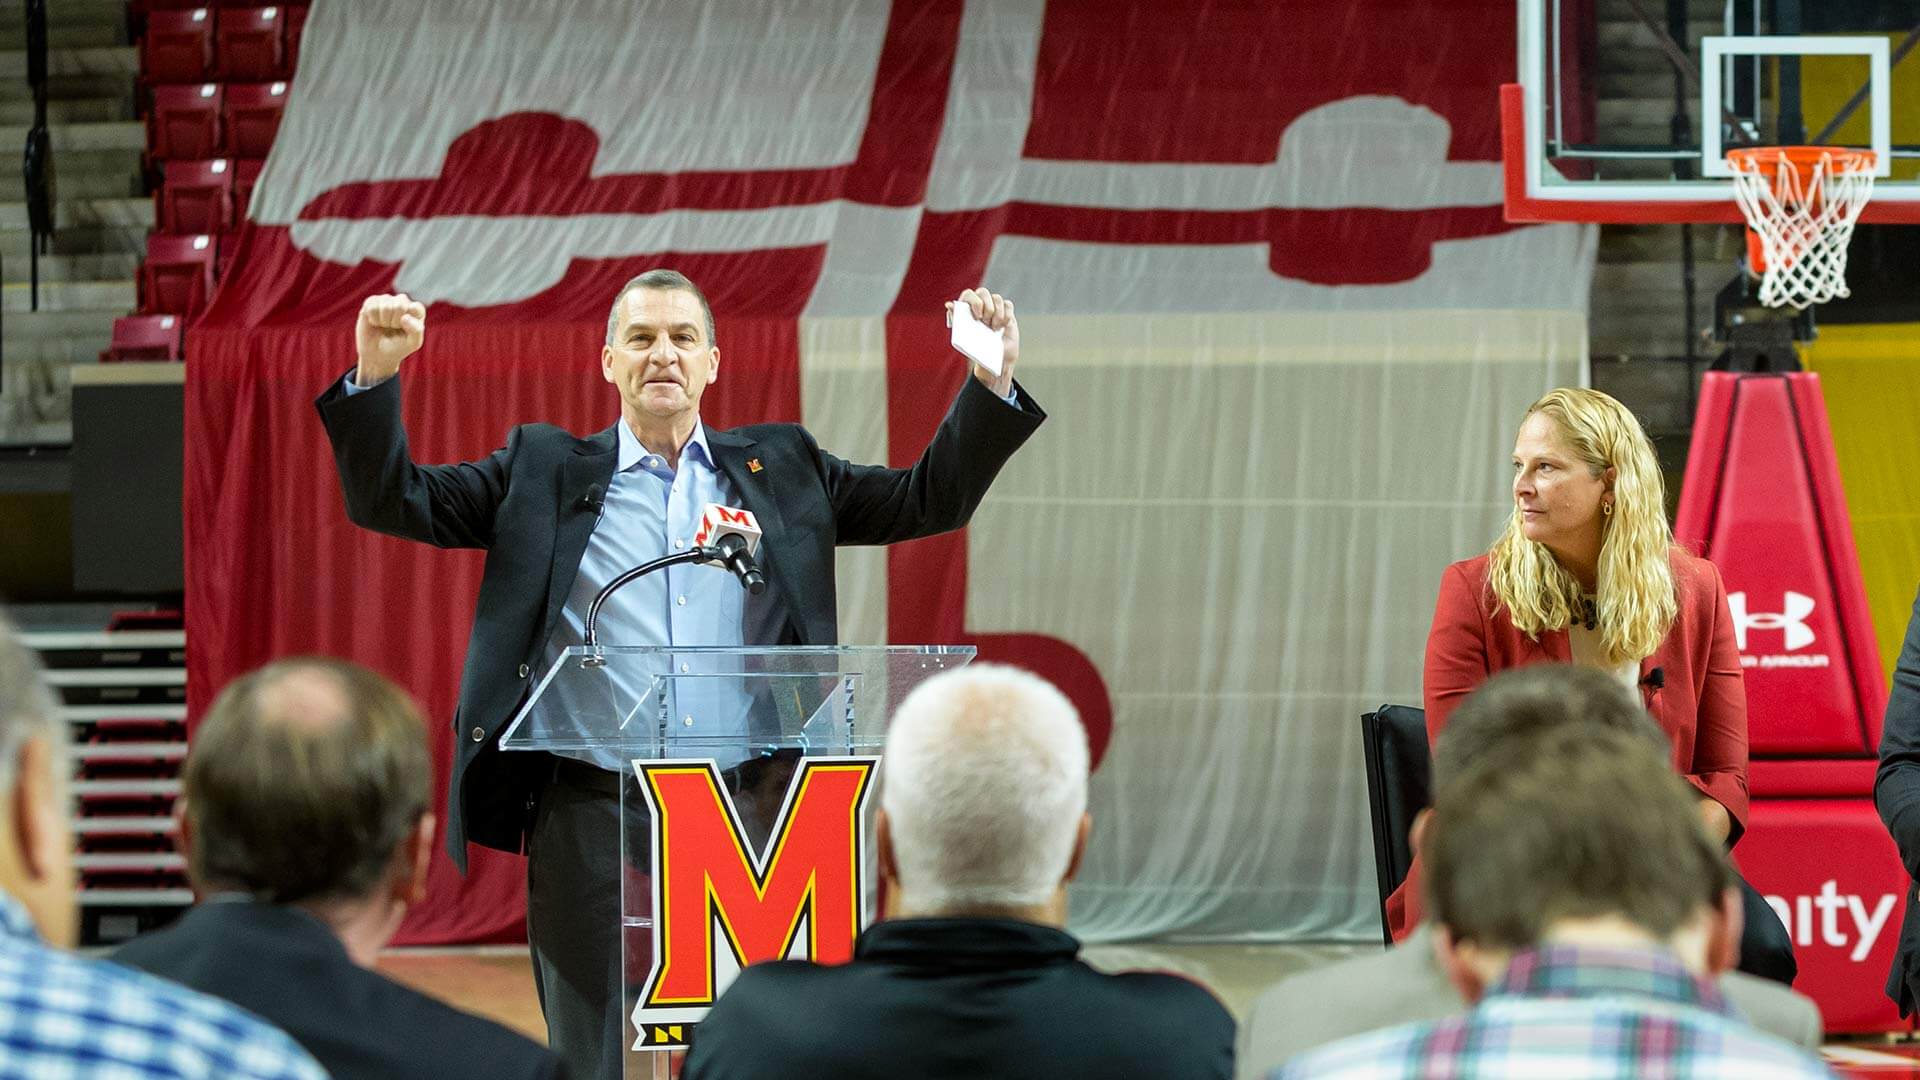 Men's head basketball coach Mark Turgeon raises his arms at the podium next to women's head coach Brenda Freese